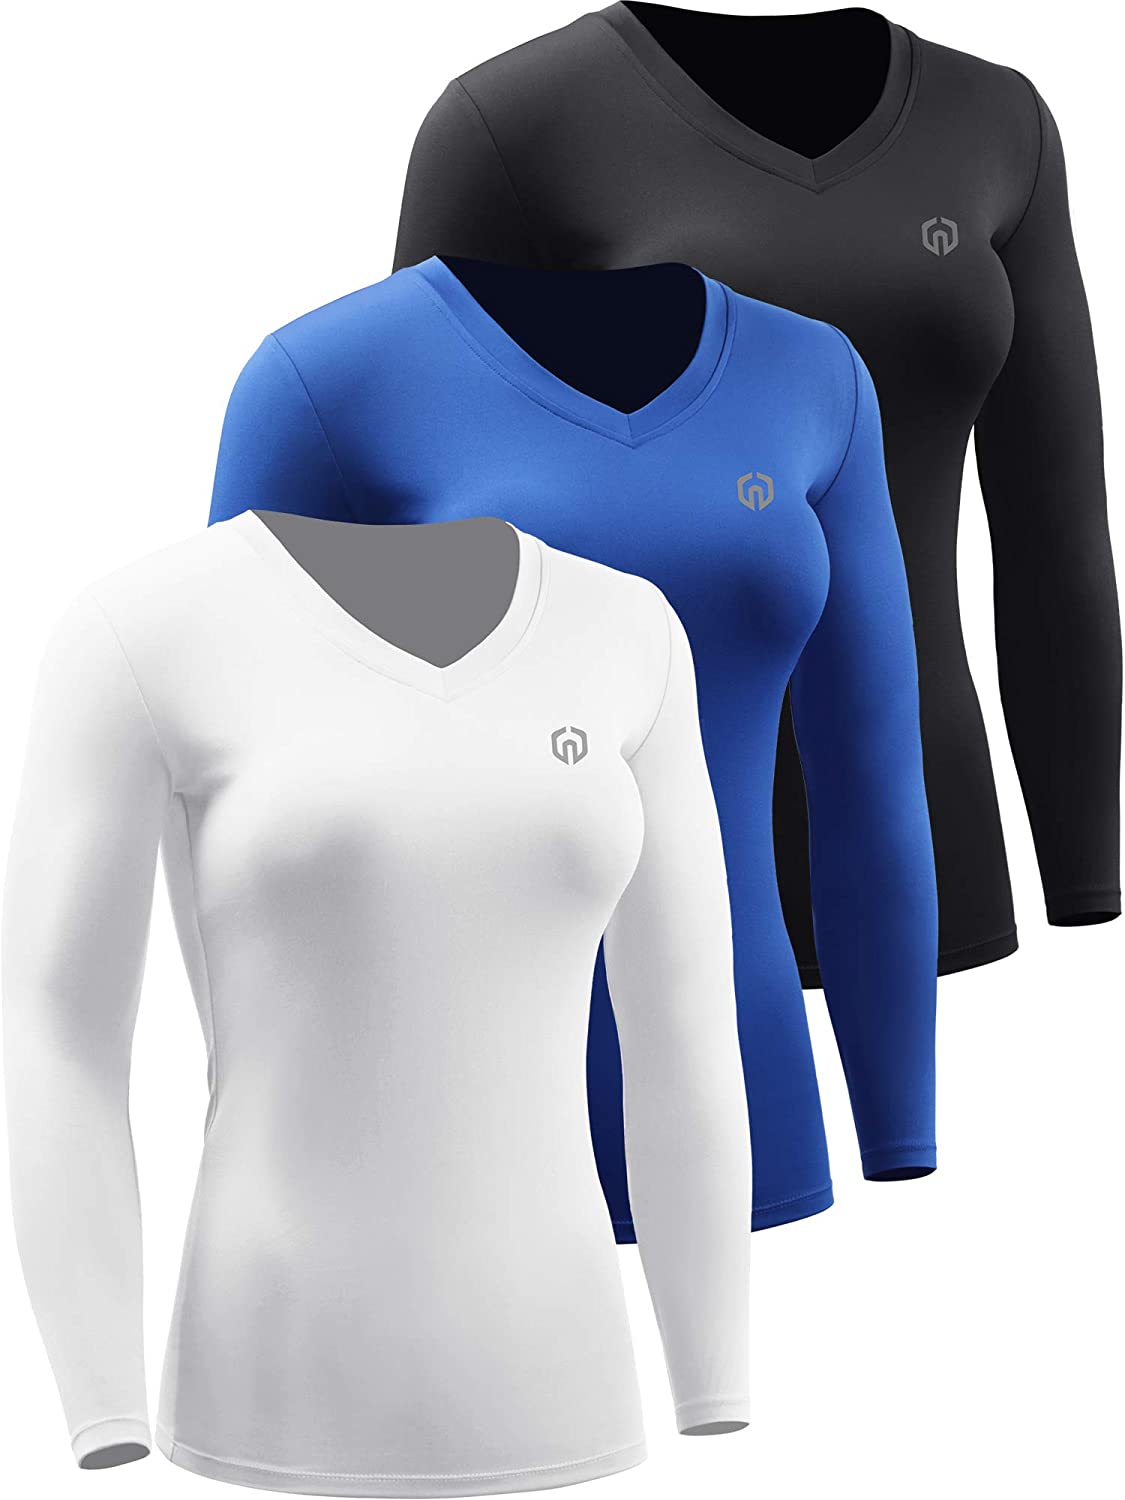 NELEUS Women's 3 Pack Compression Shirts Long Sleeve Yoga Athletic Running  T Shi